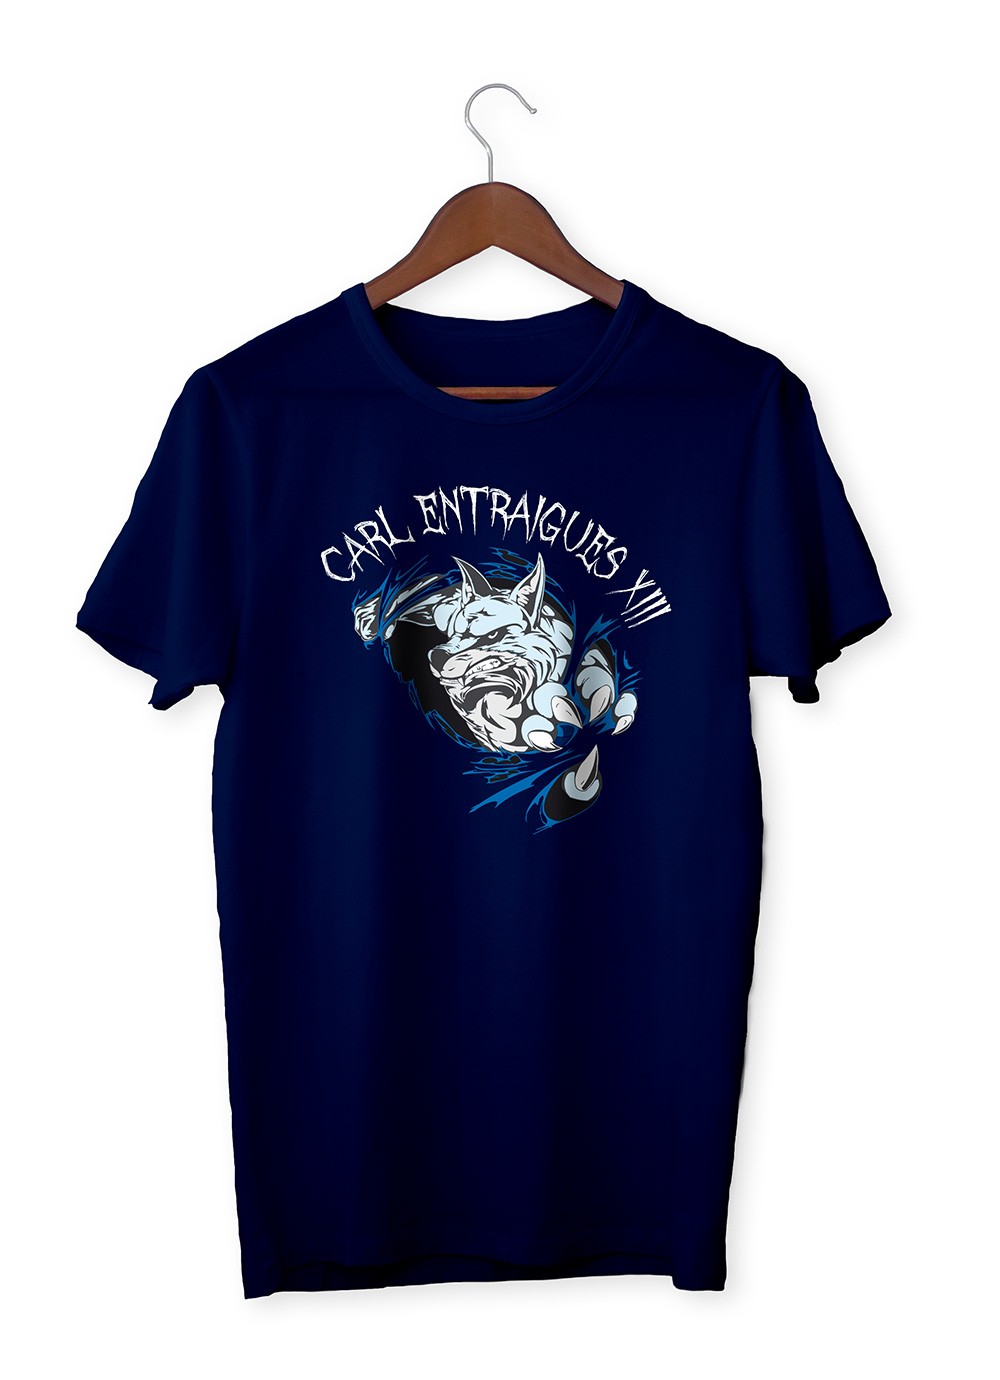 T-shirt homme Carl Entraigues XIII Bleu Wolf marine